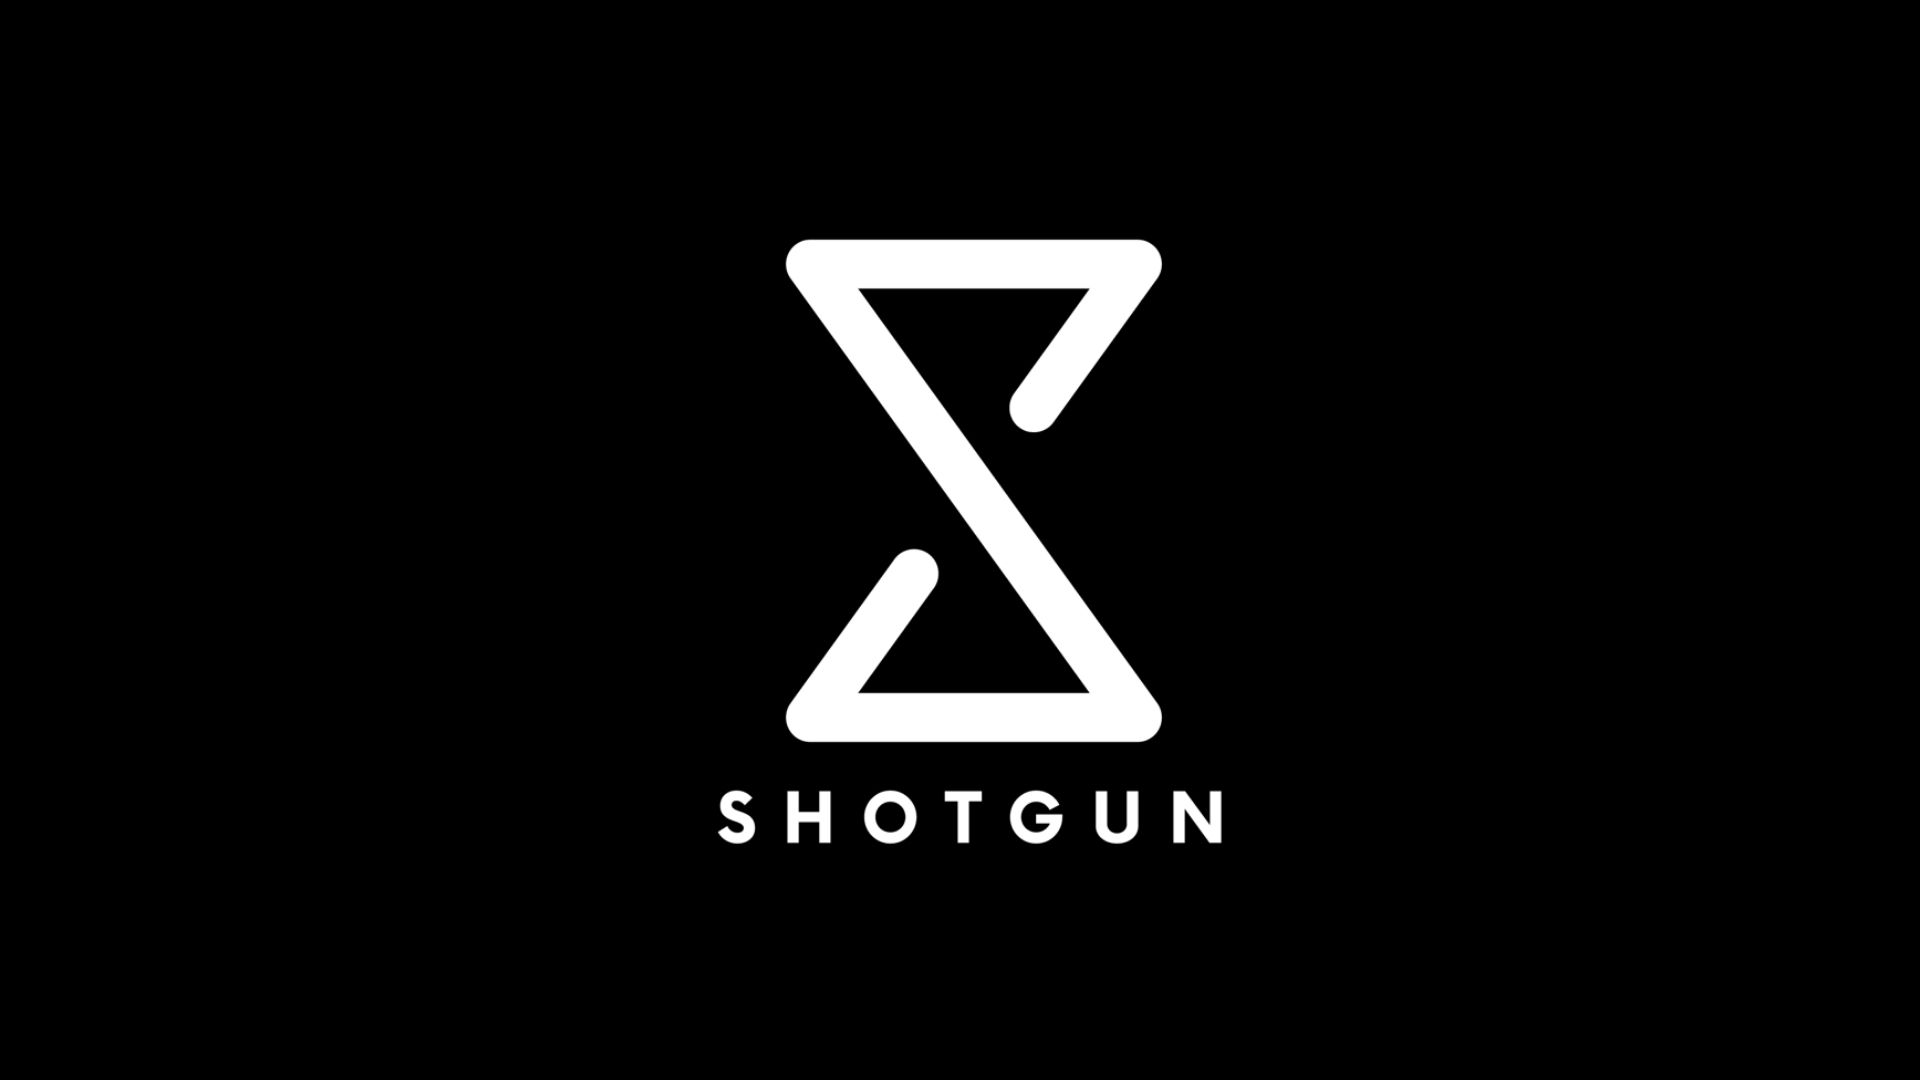 Shotgun lève deux millions d’euros